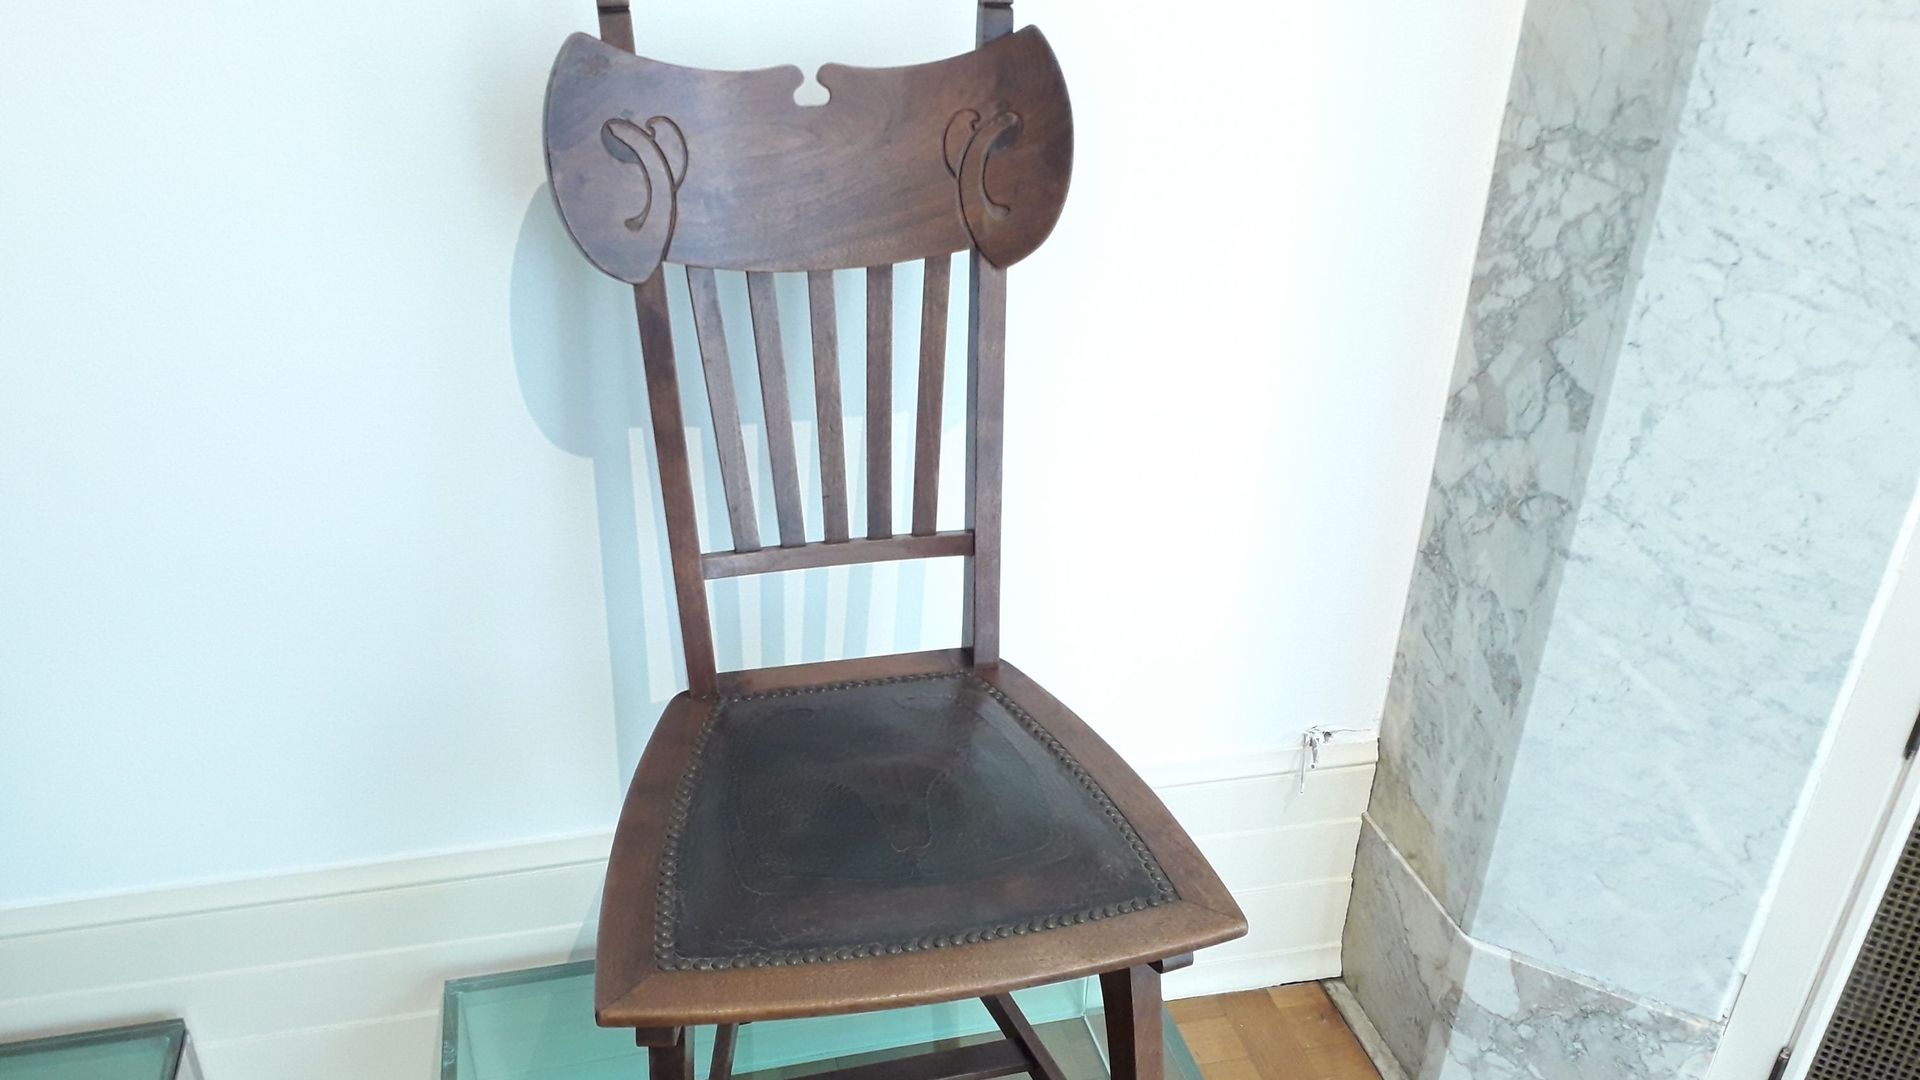 Chaise de Gustave Serrurier-Bovy 2

